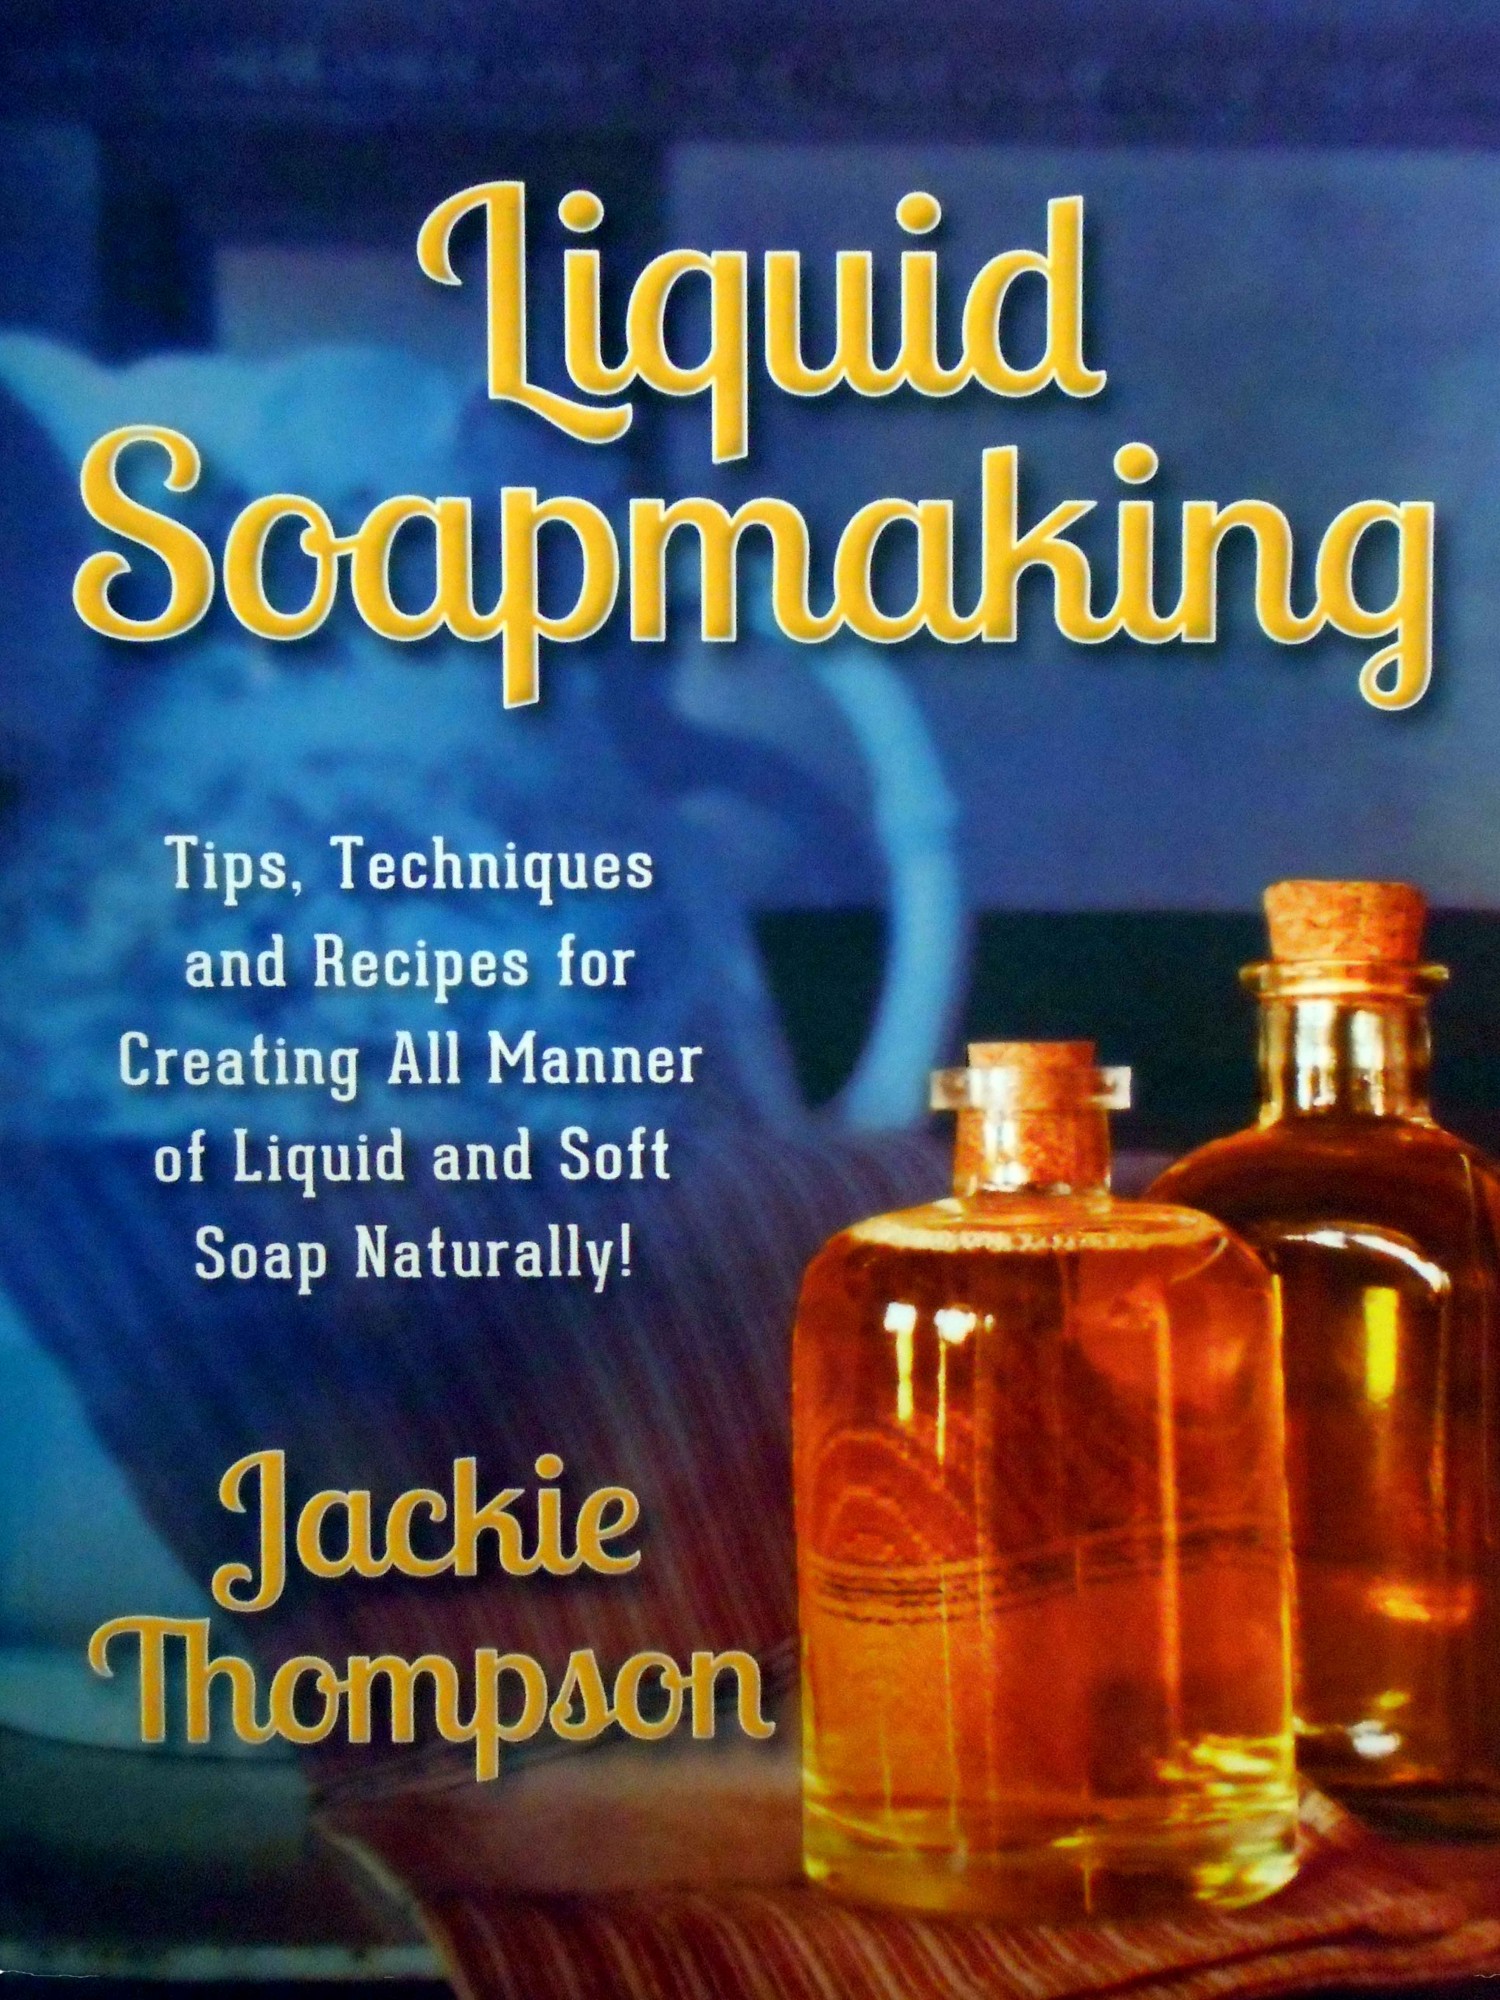 Liquid Soapmaking